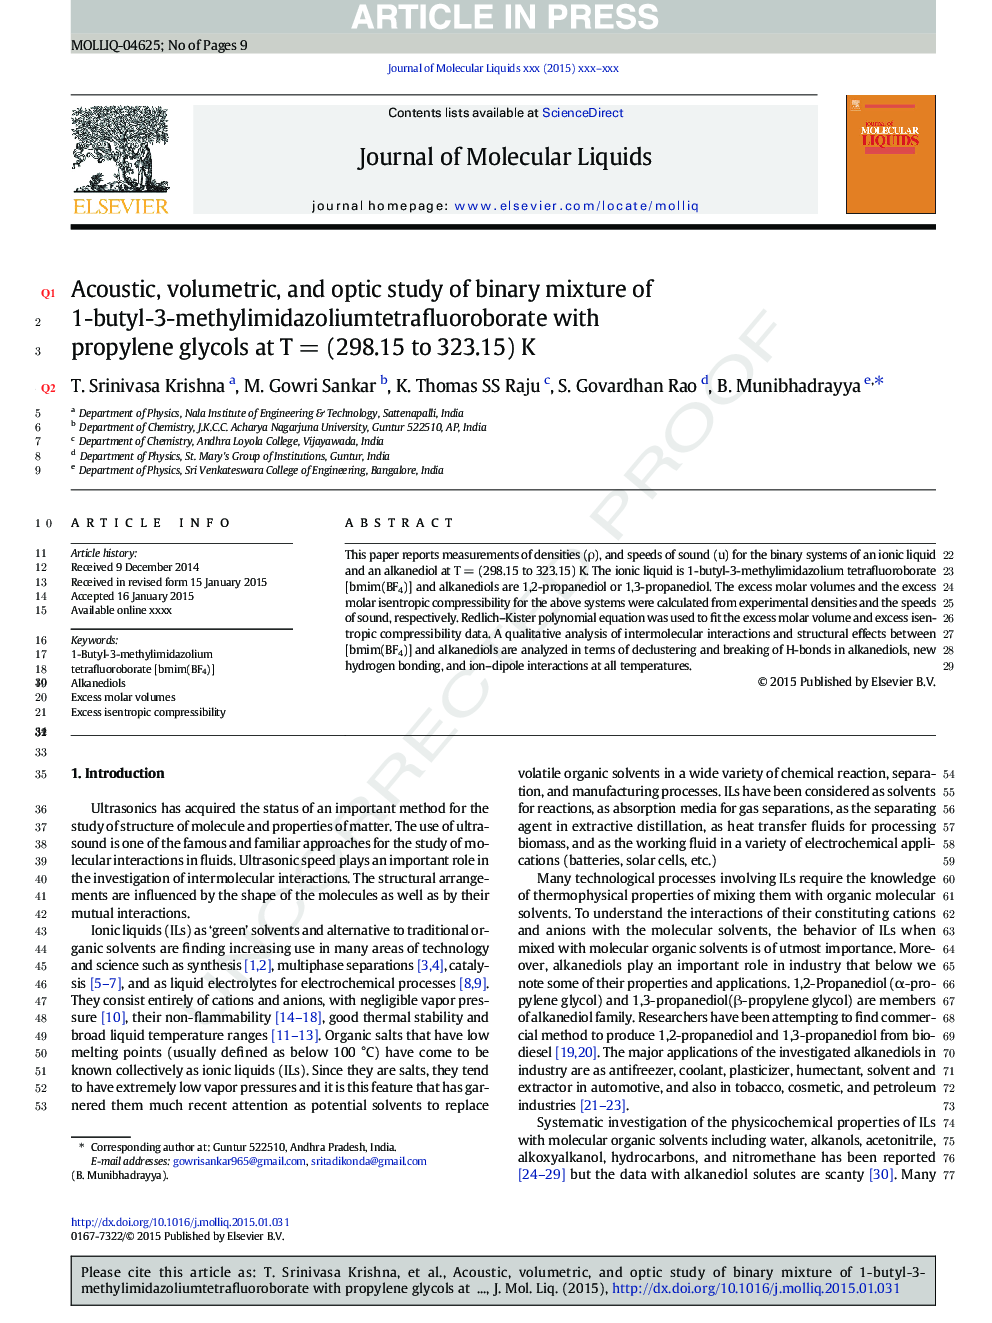 Acoustic, volumetric, and optic study of binary mixture of 1-butyl-3-methylimidazoliumtetrafluoroborate with propylene glycols at TÂ =Â (298.15 to 323.15) K